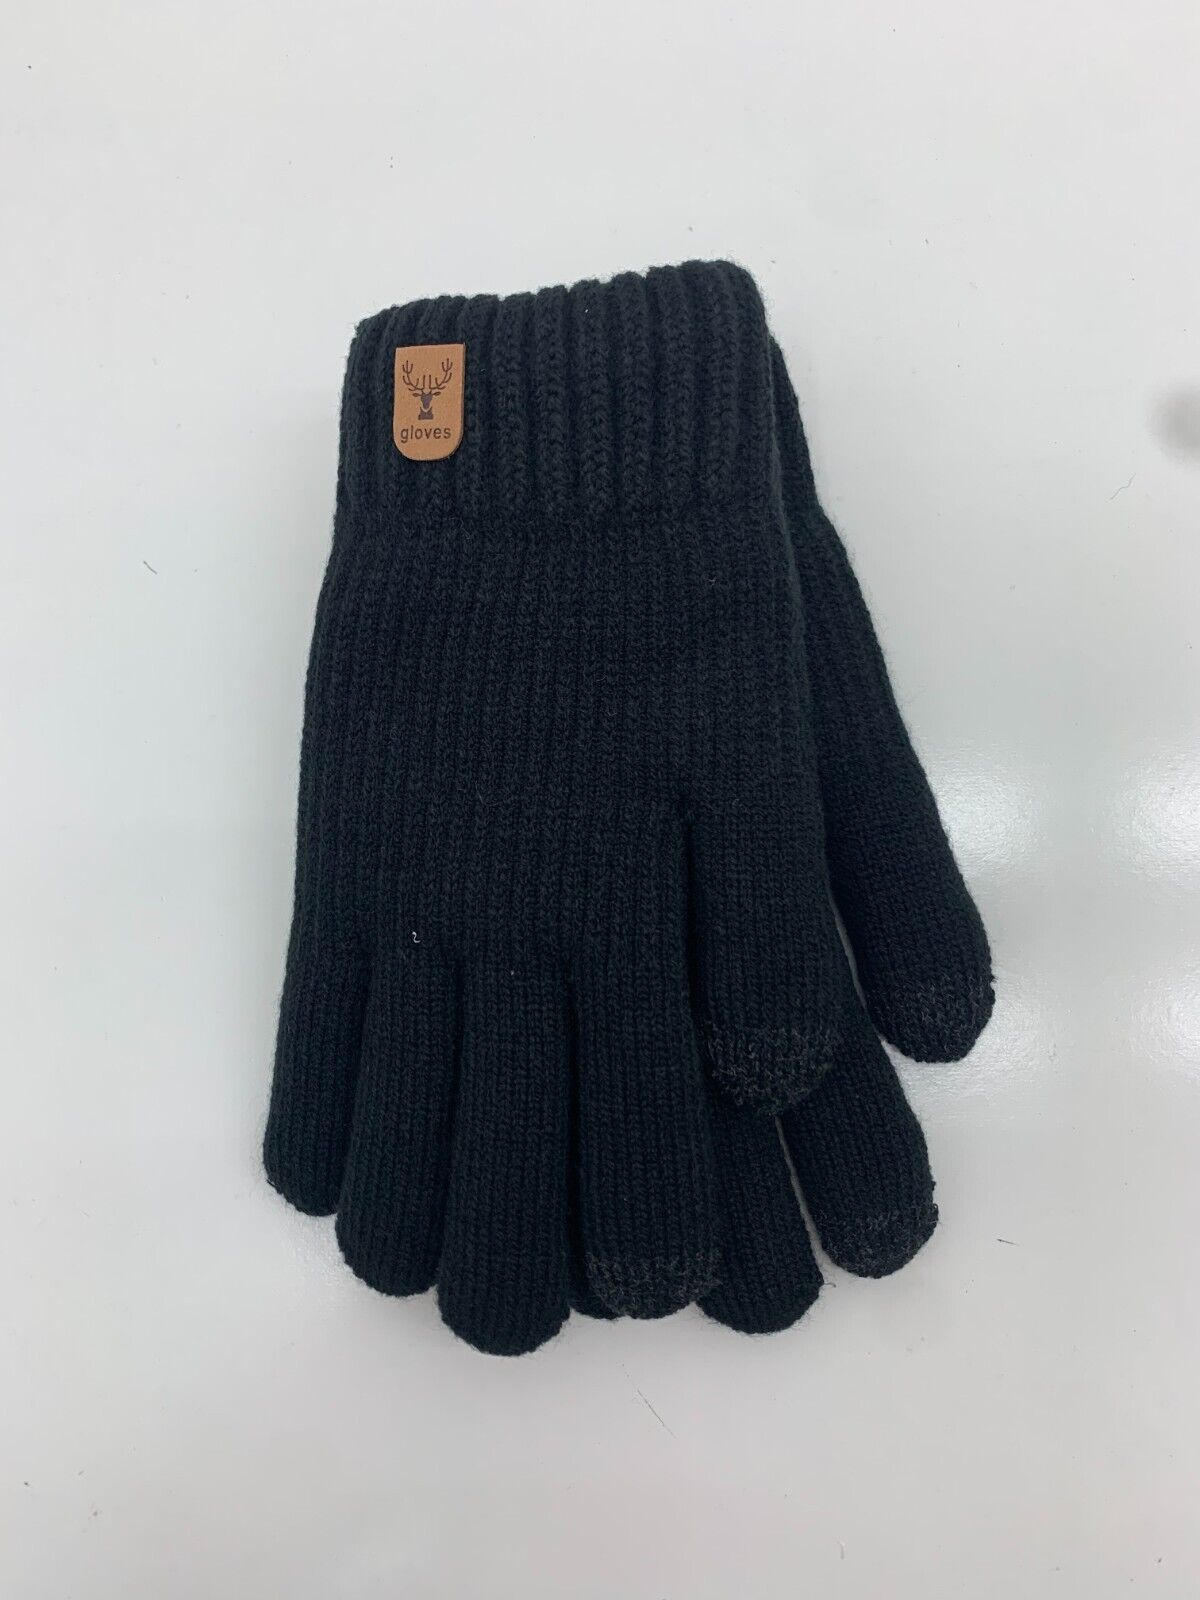 Unisex Black Knit Fleece Lined Gloves Size Medium